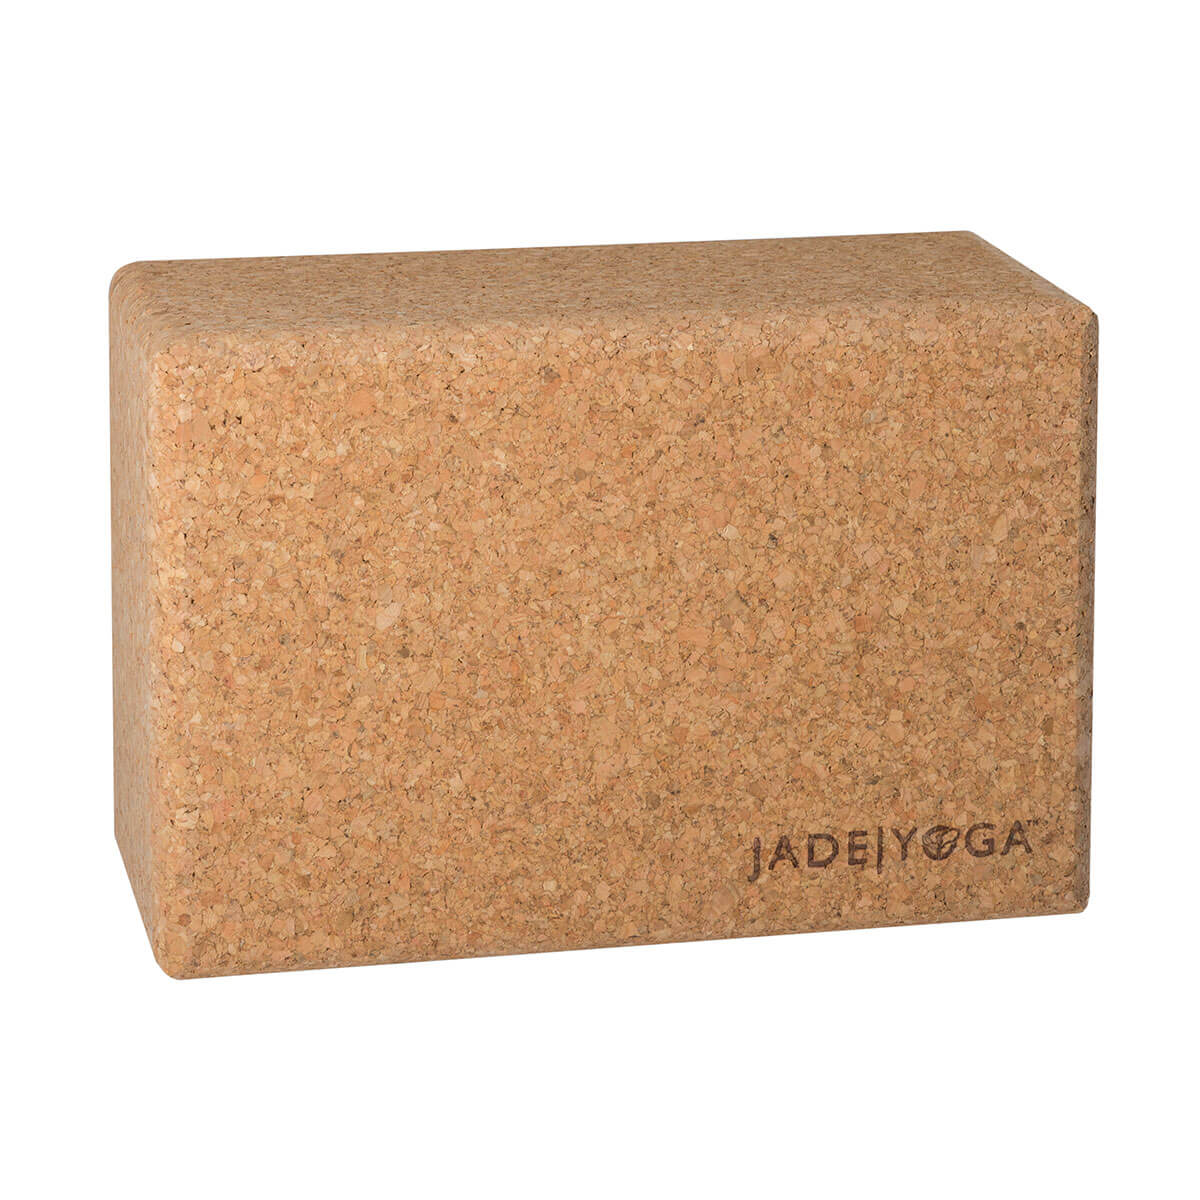 Plain Brown Cork Yoga Block, Thickness: 9 X 3 X 5 Inch at Rs 350